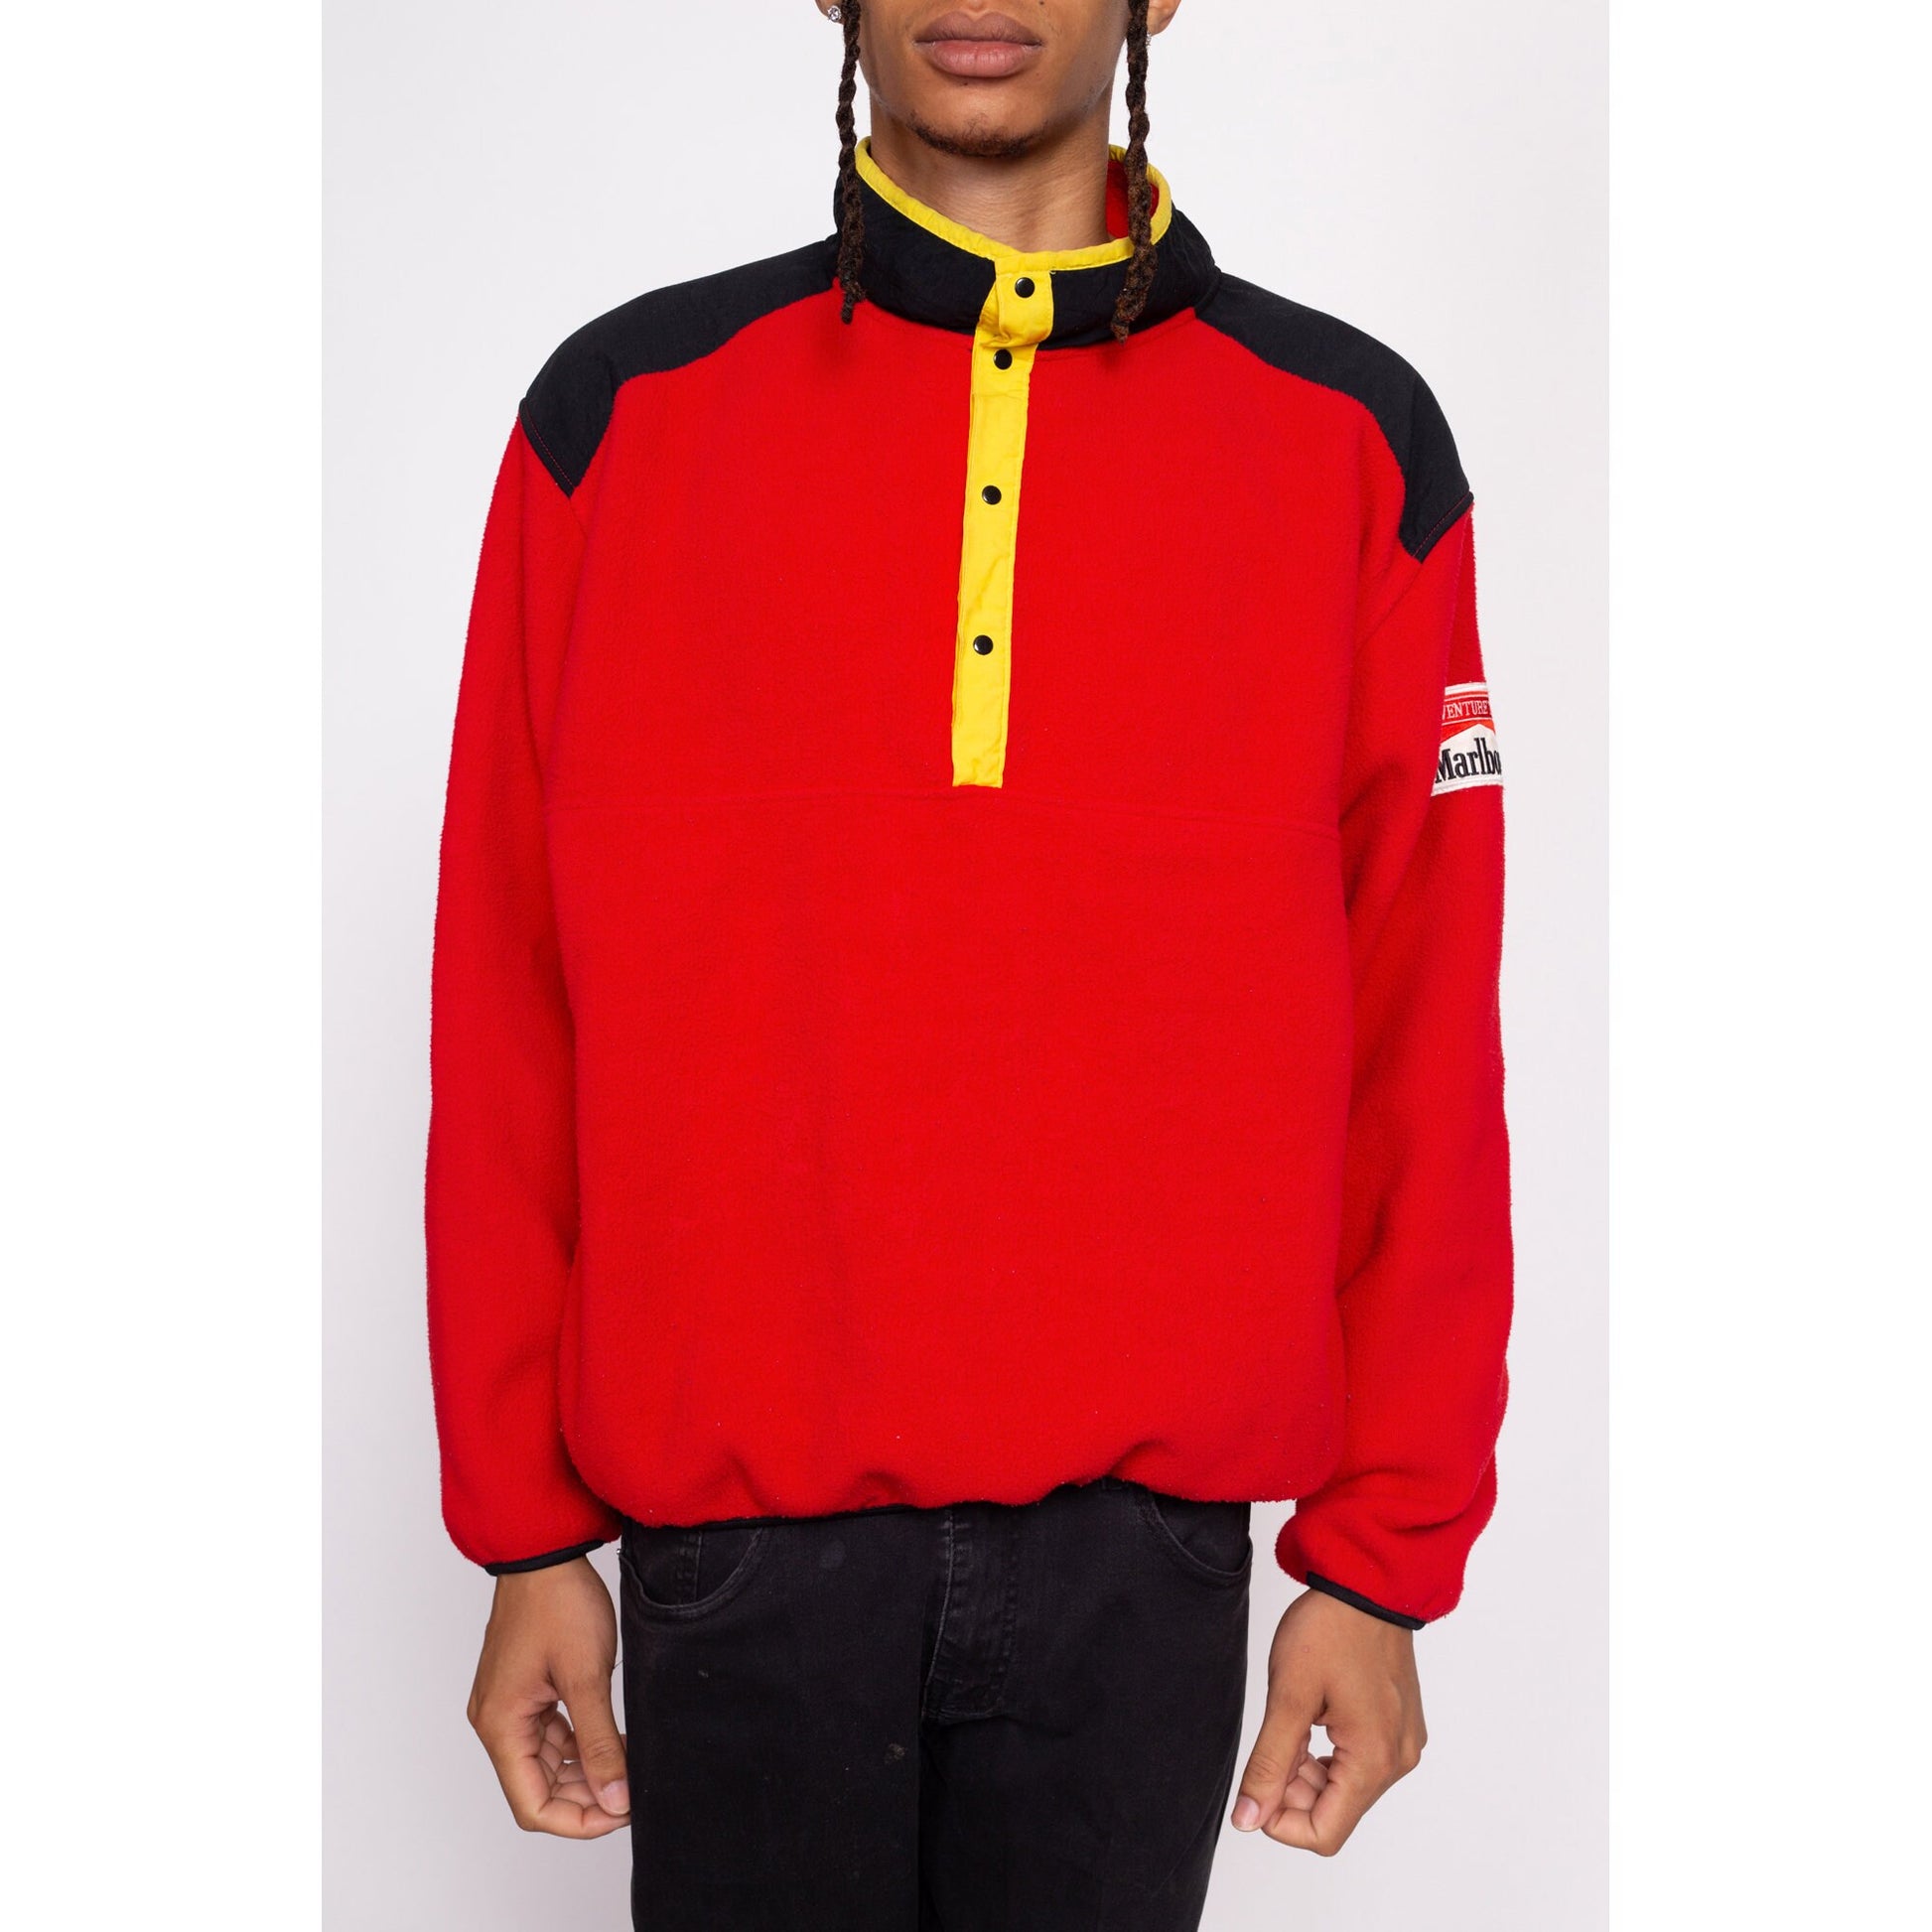 90s Marlboro Red Color Block Fleece Sweatshirt - Men's Large | Vintage Adventure Team Henley Pullover